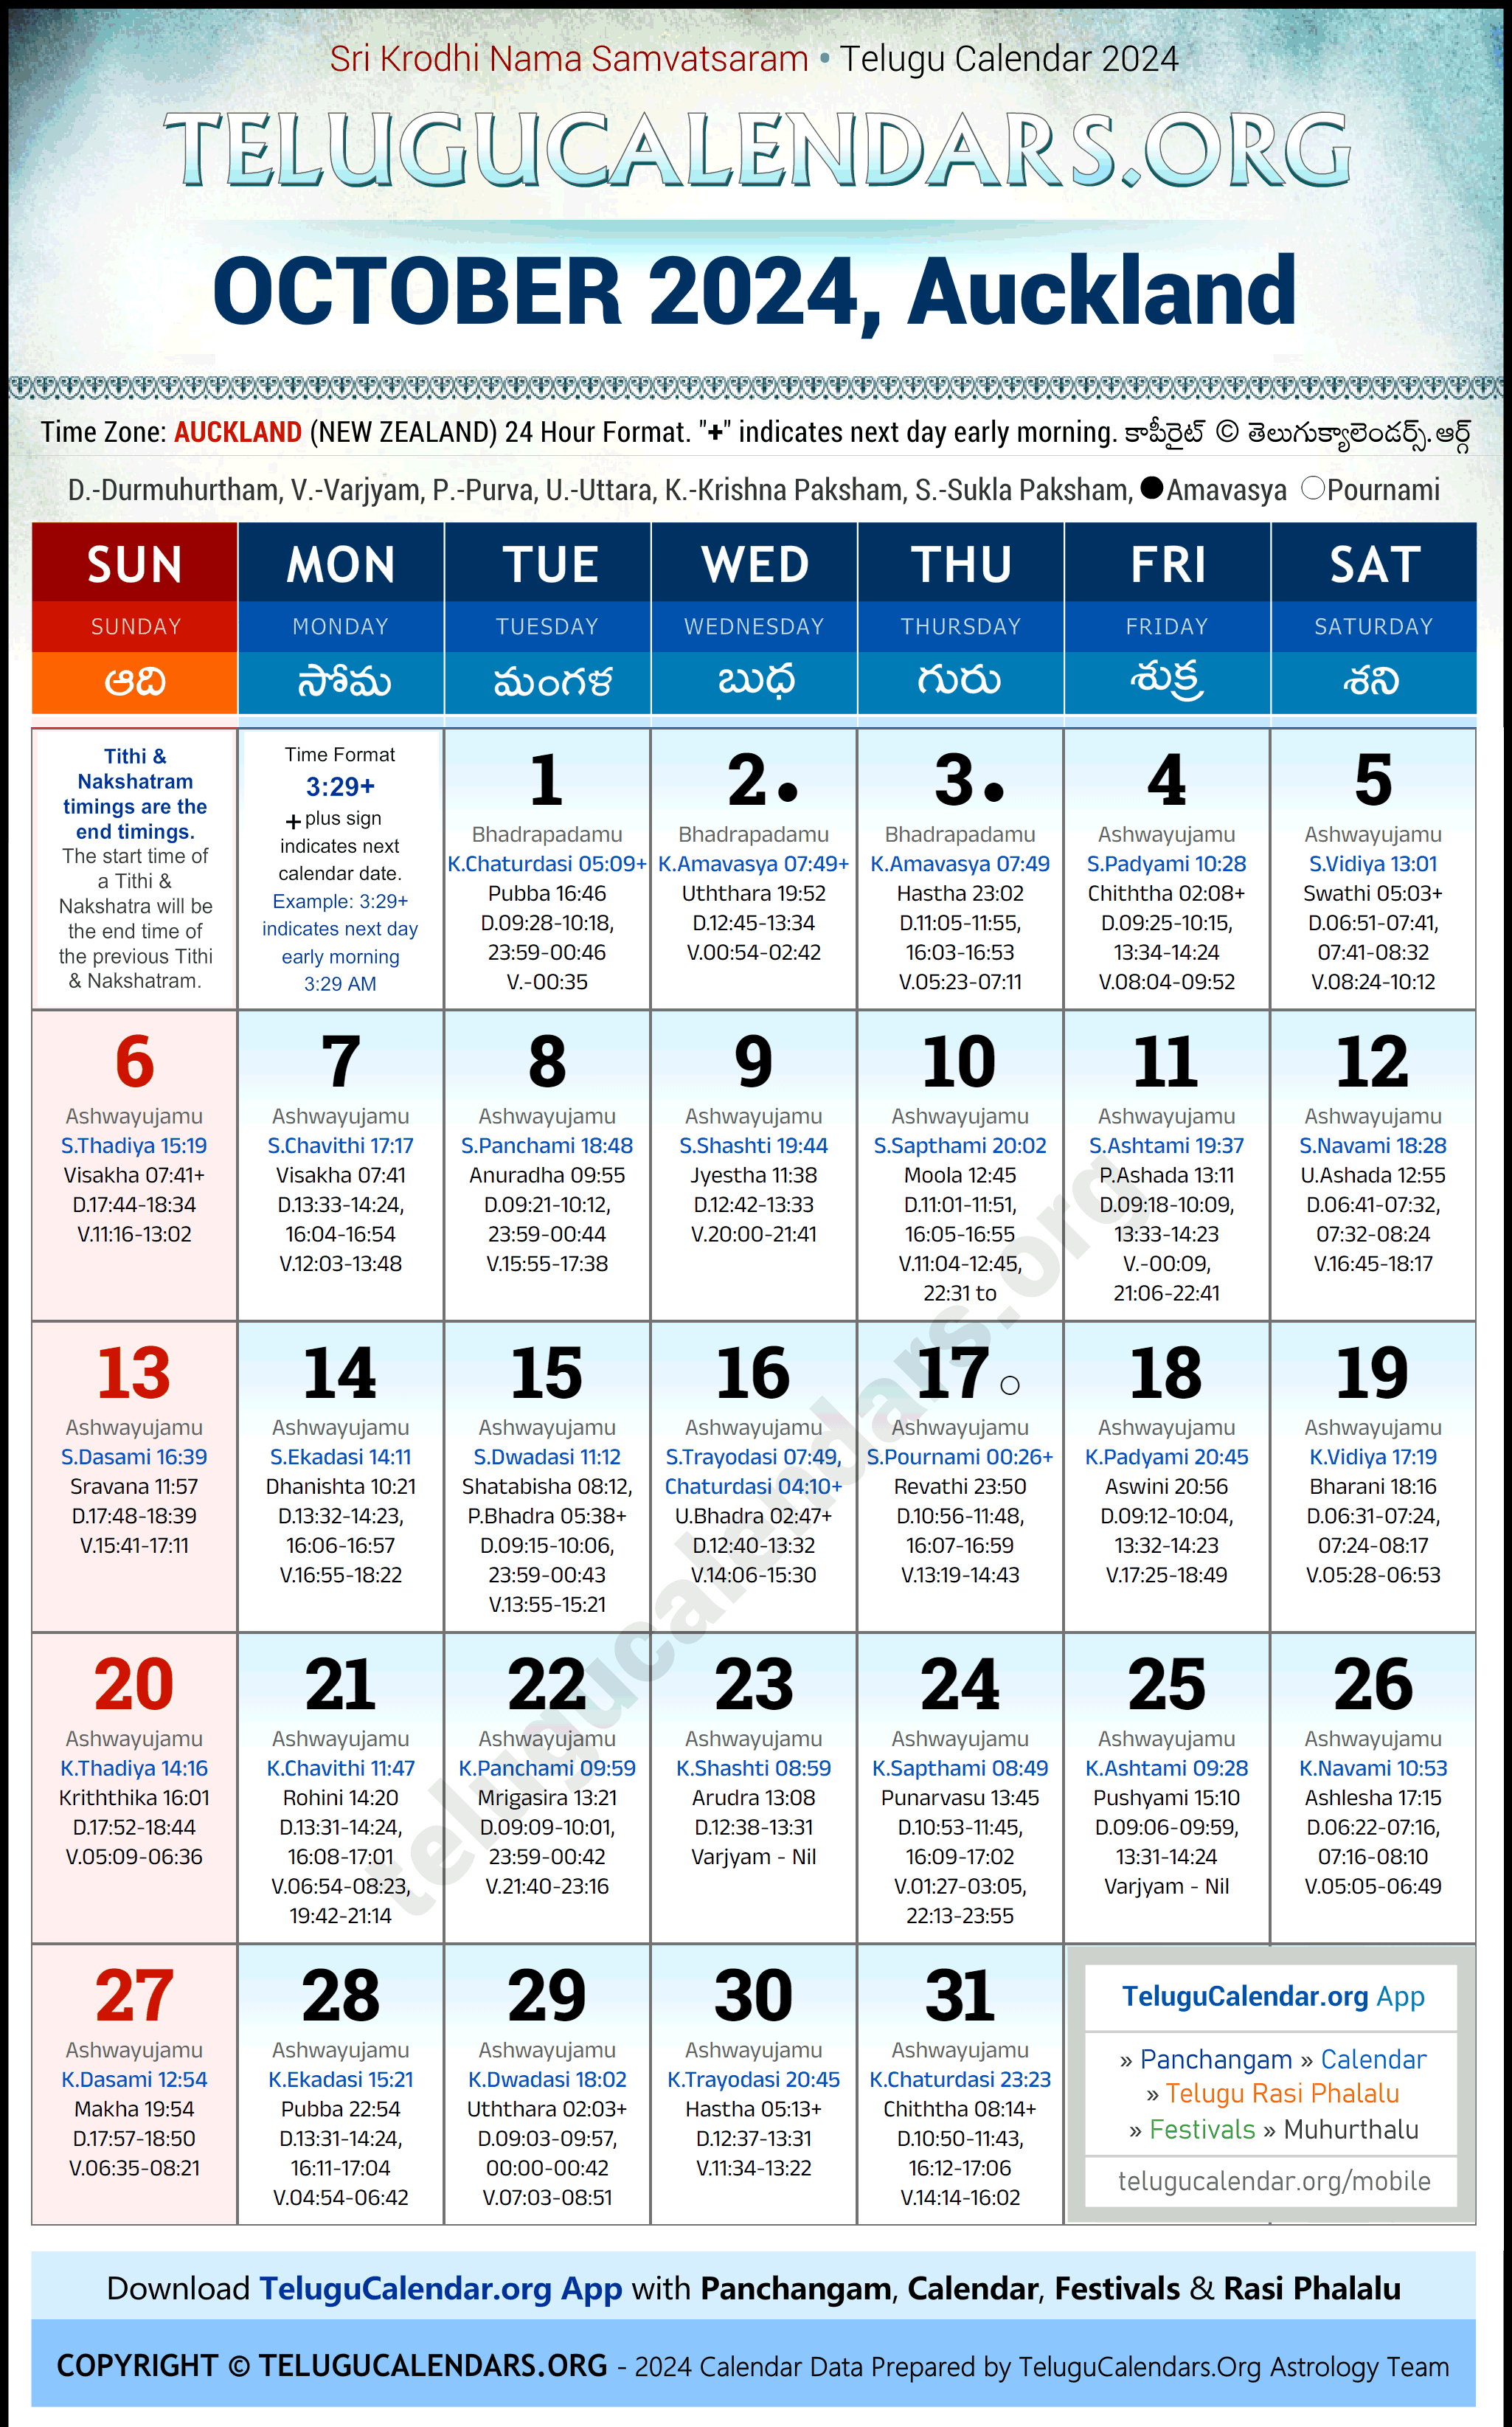 Telugu Calendar 2024 October Festivals for Auckland